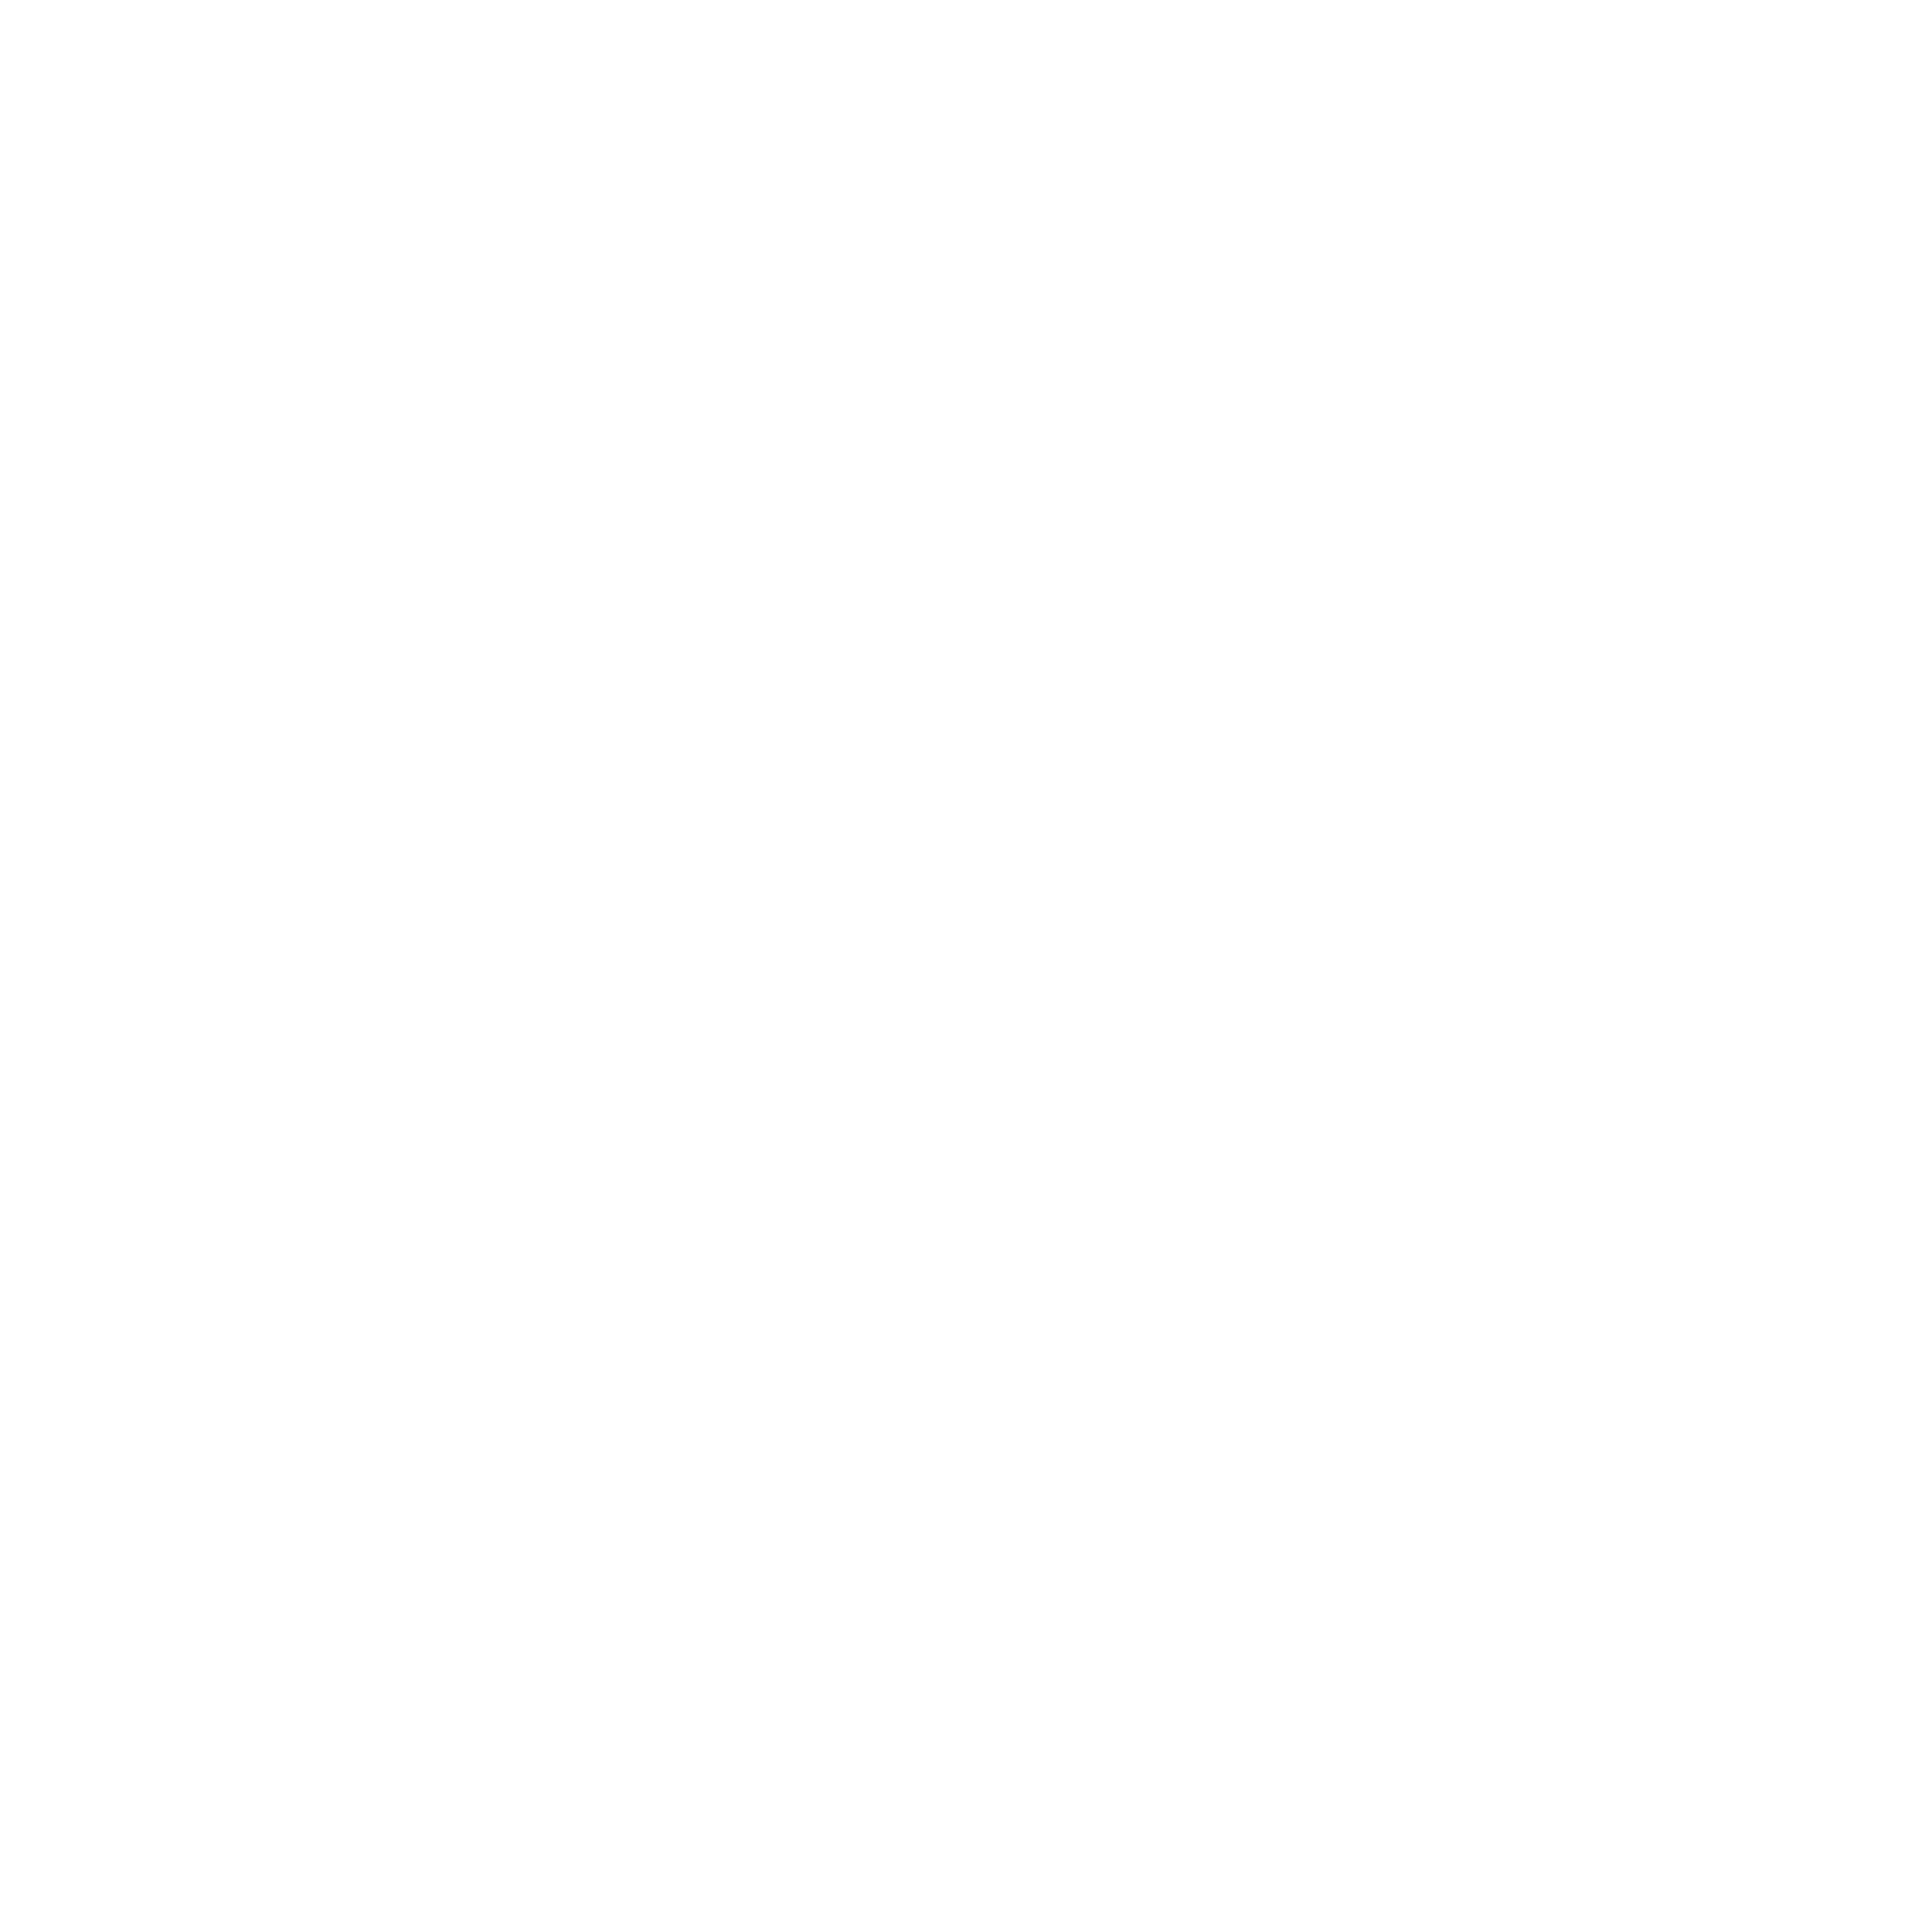 Ebrothers